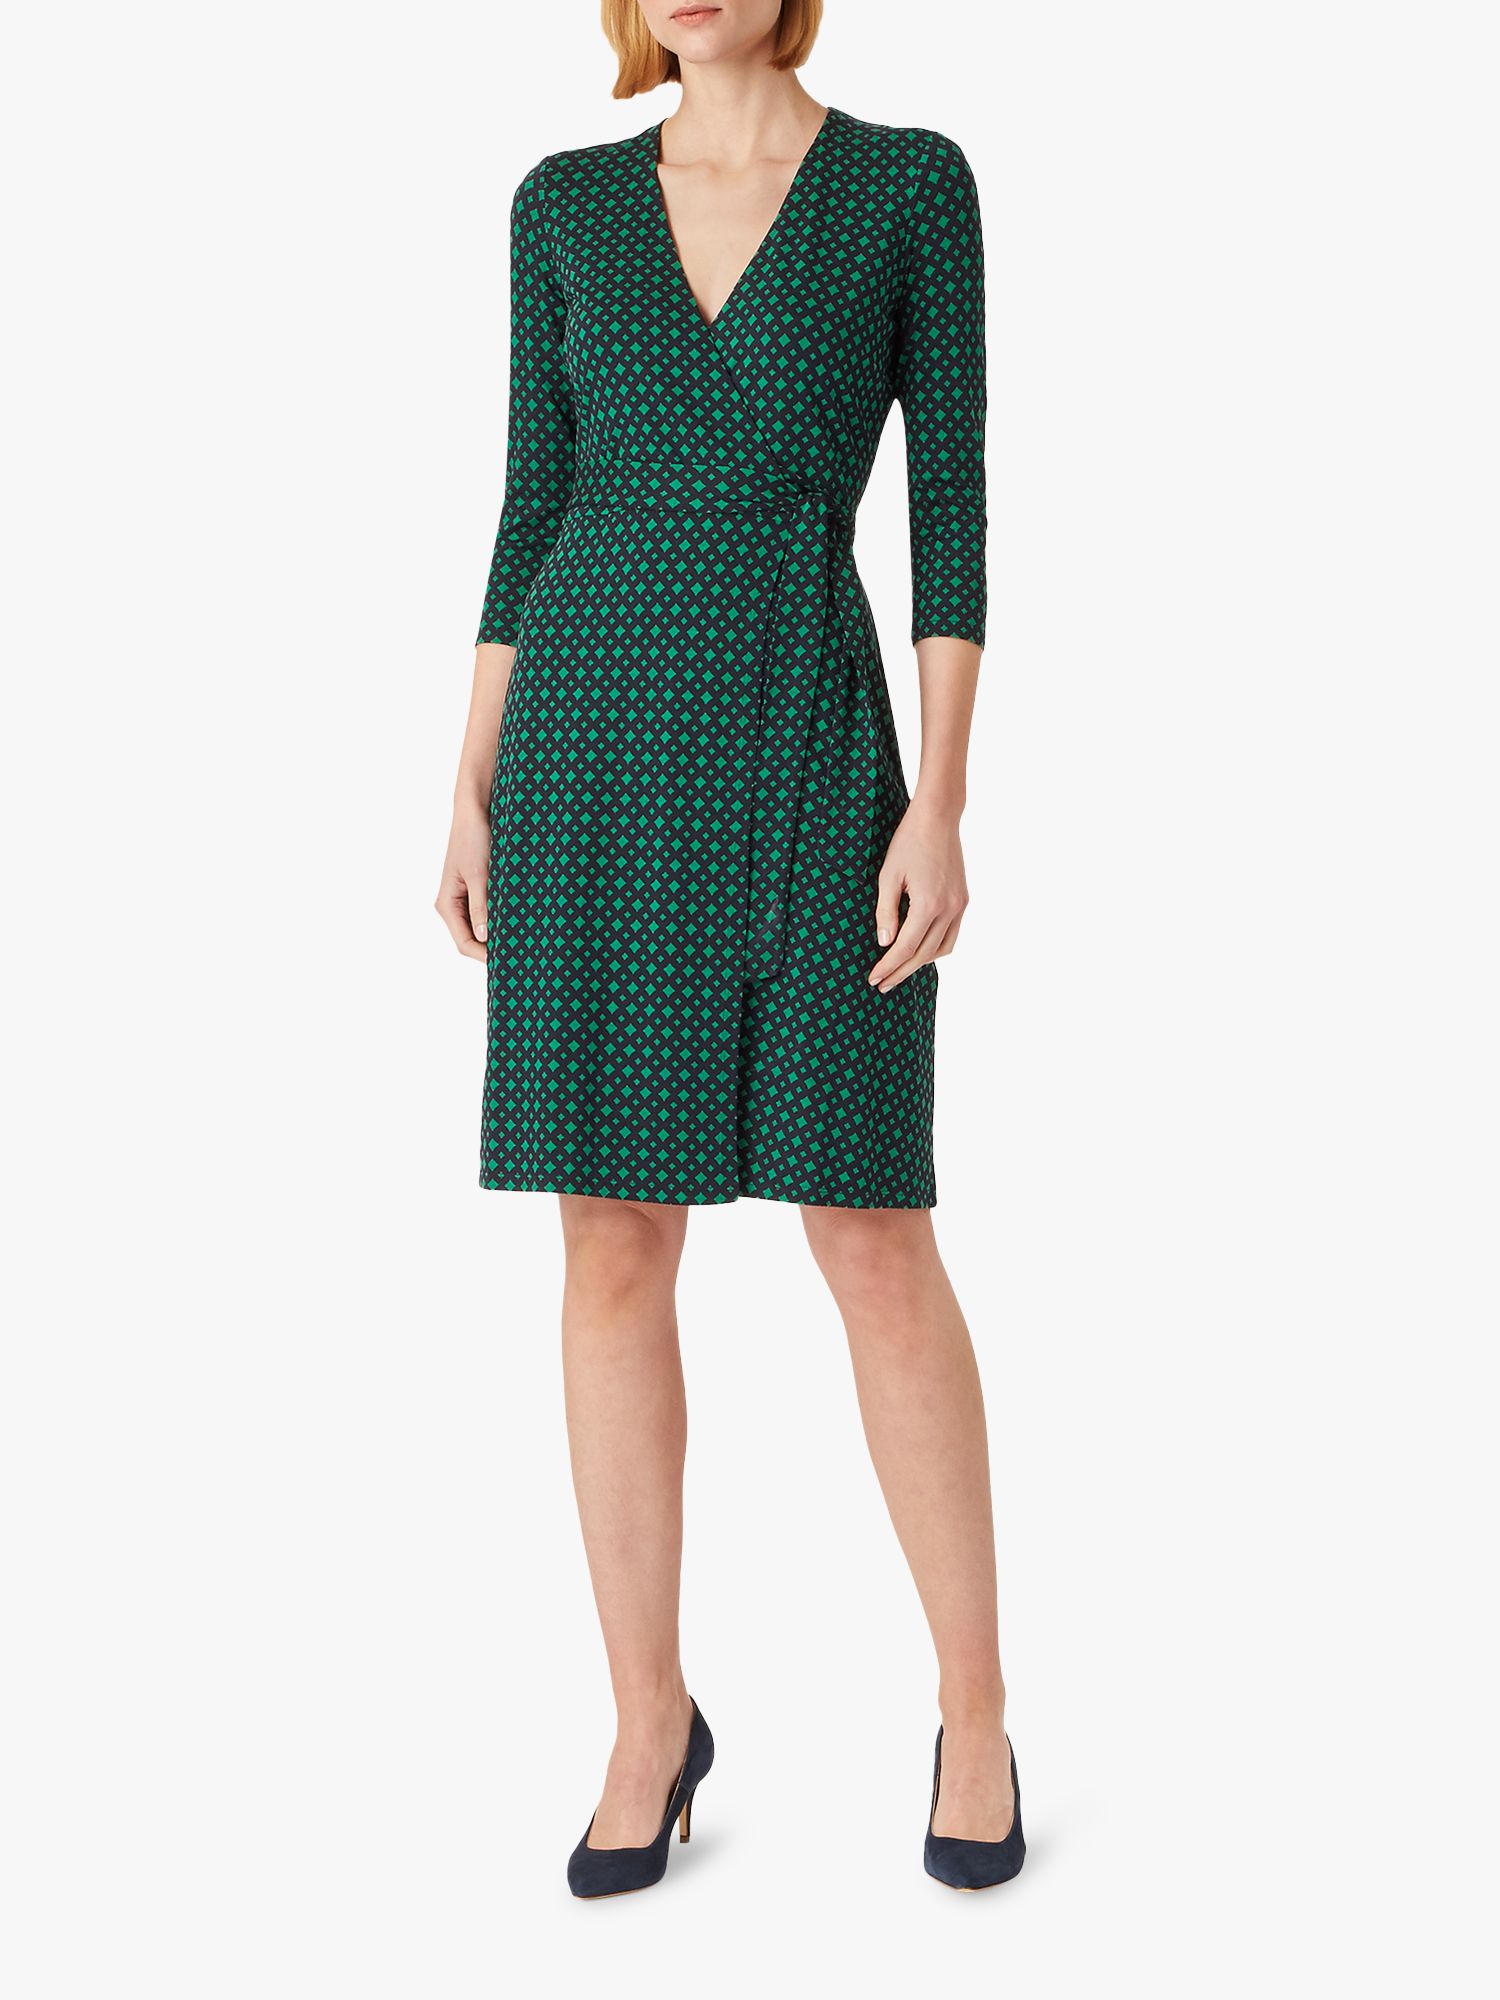 Hobbs Delilah Print Wrap Dress, Navy/Green